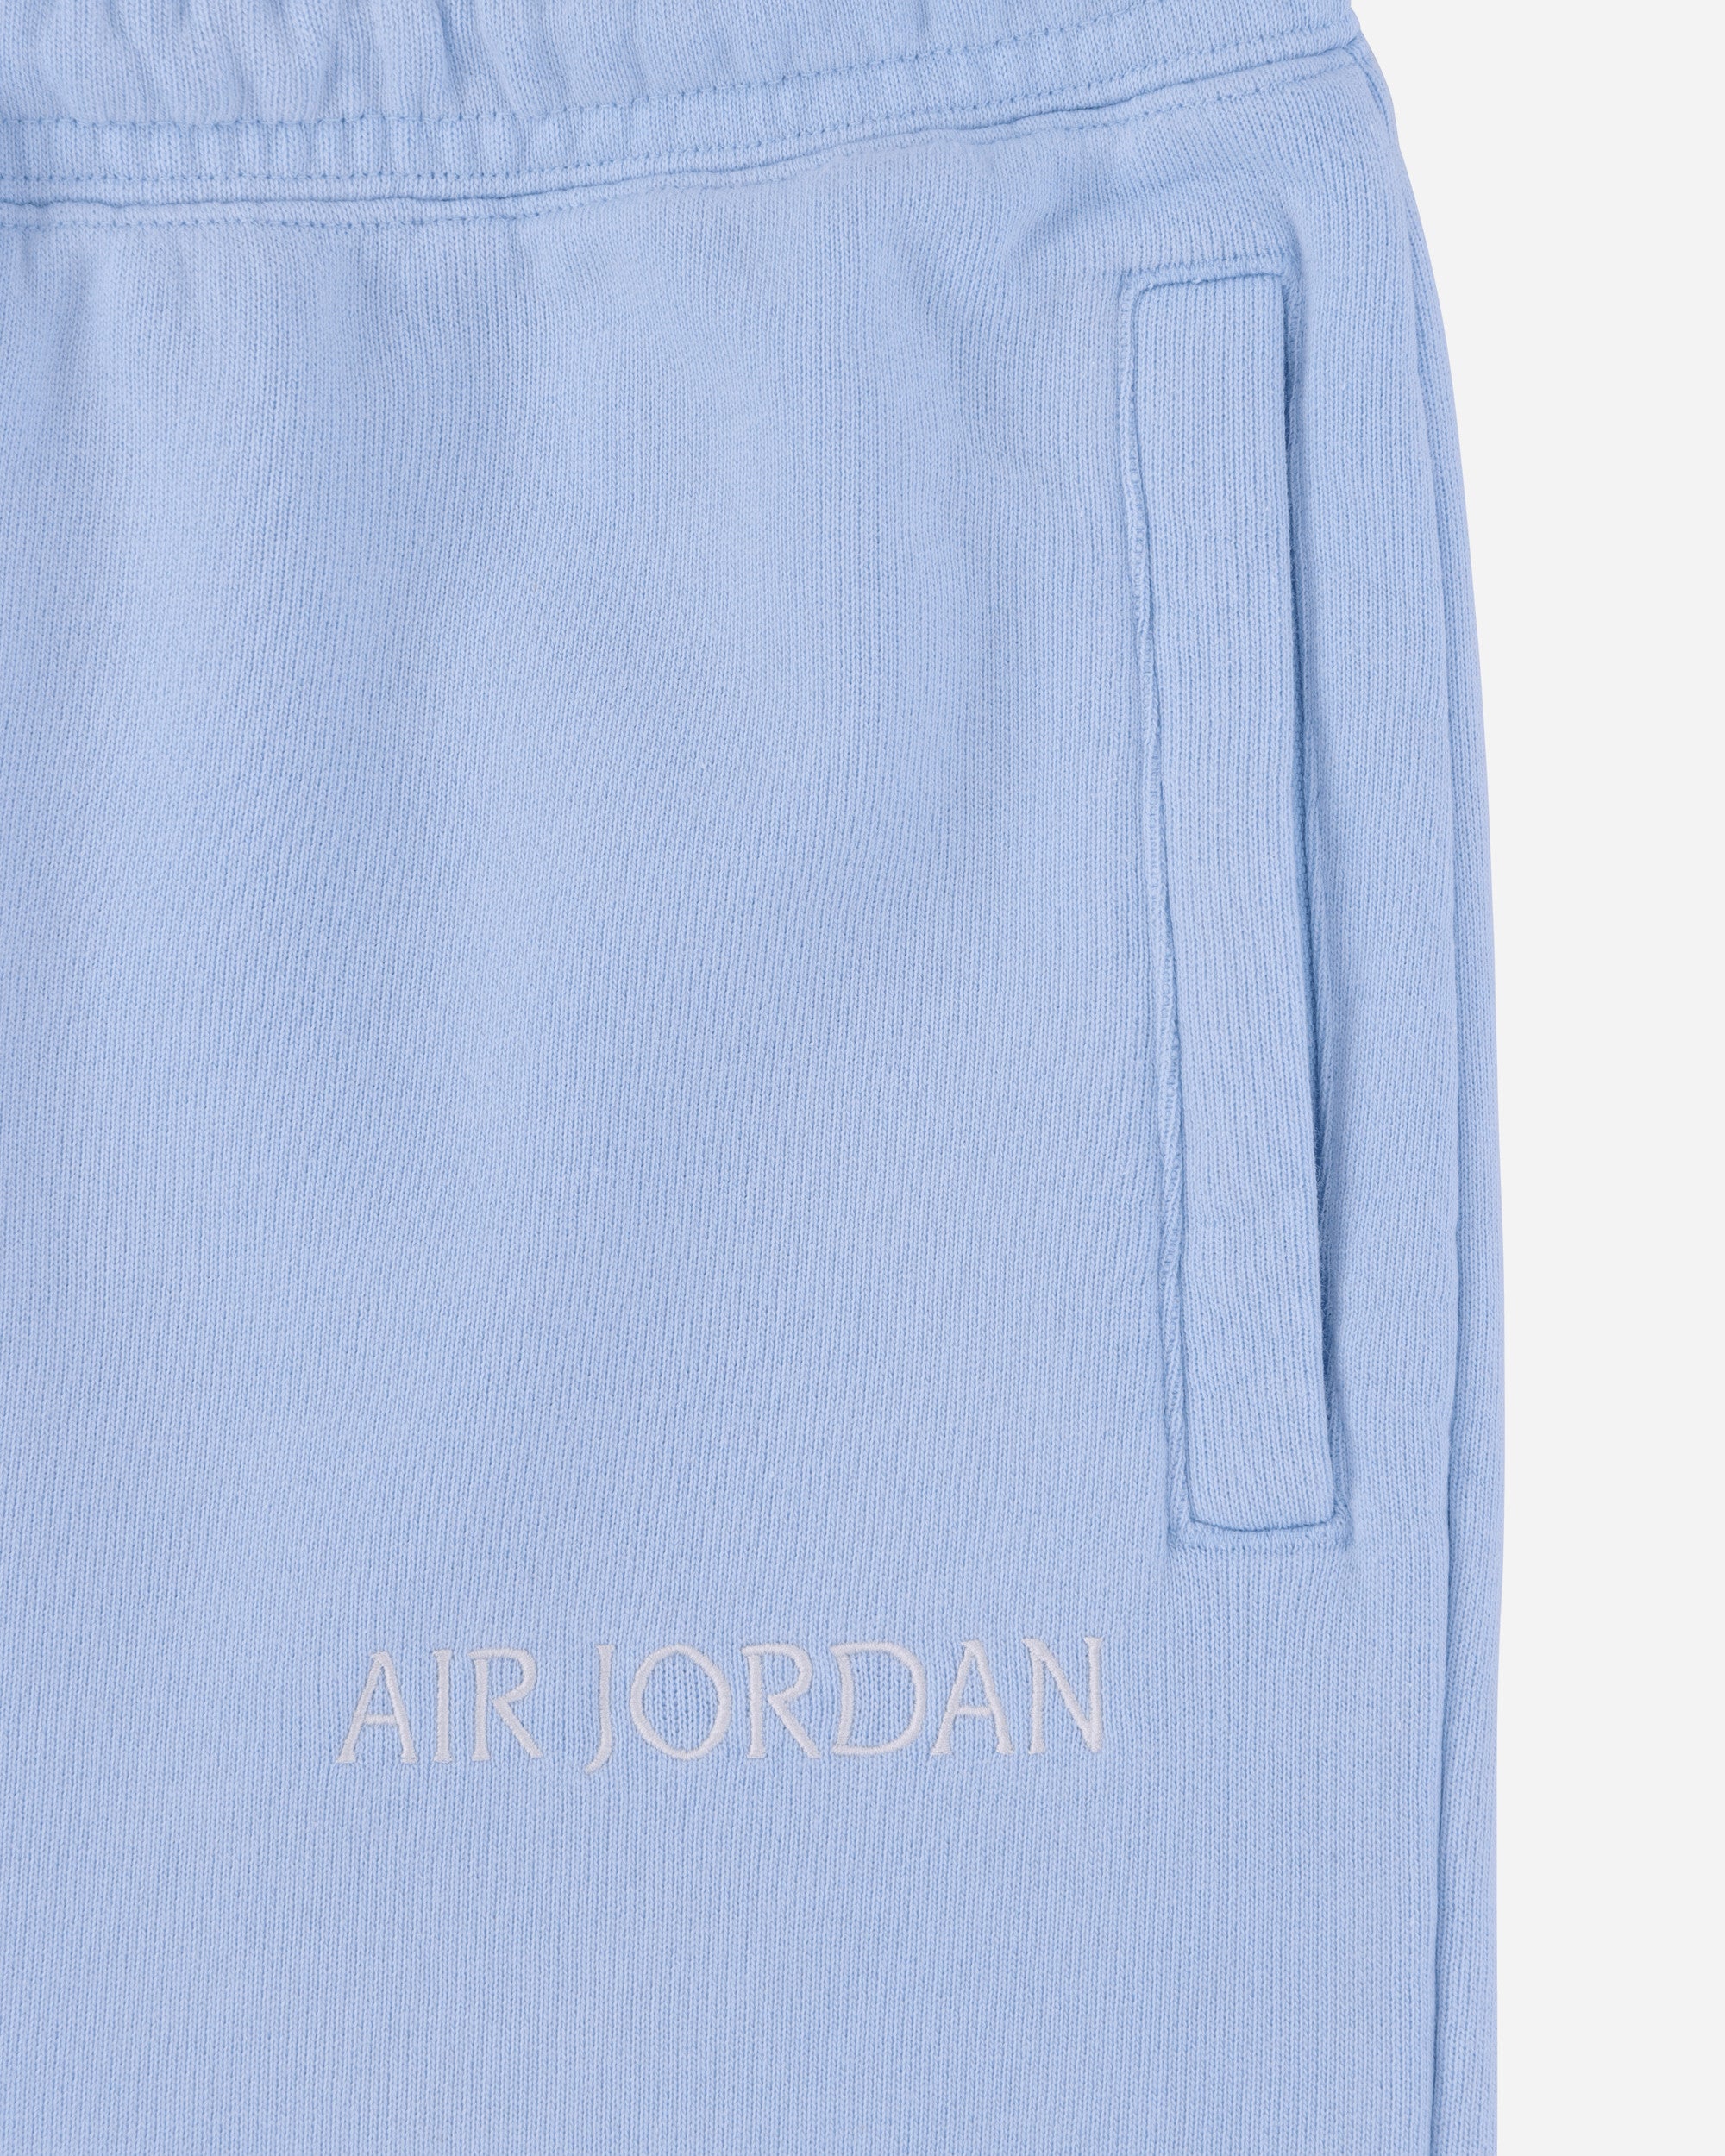 Nike Jordan Wmns J Air Jdn Sp Wm Flc Pant Ice Blue/Sail Pants Sweatpants DV6471-411